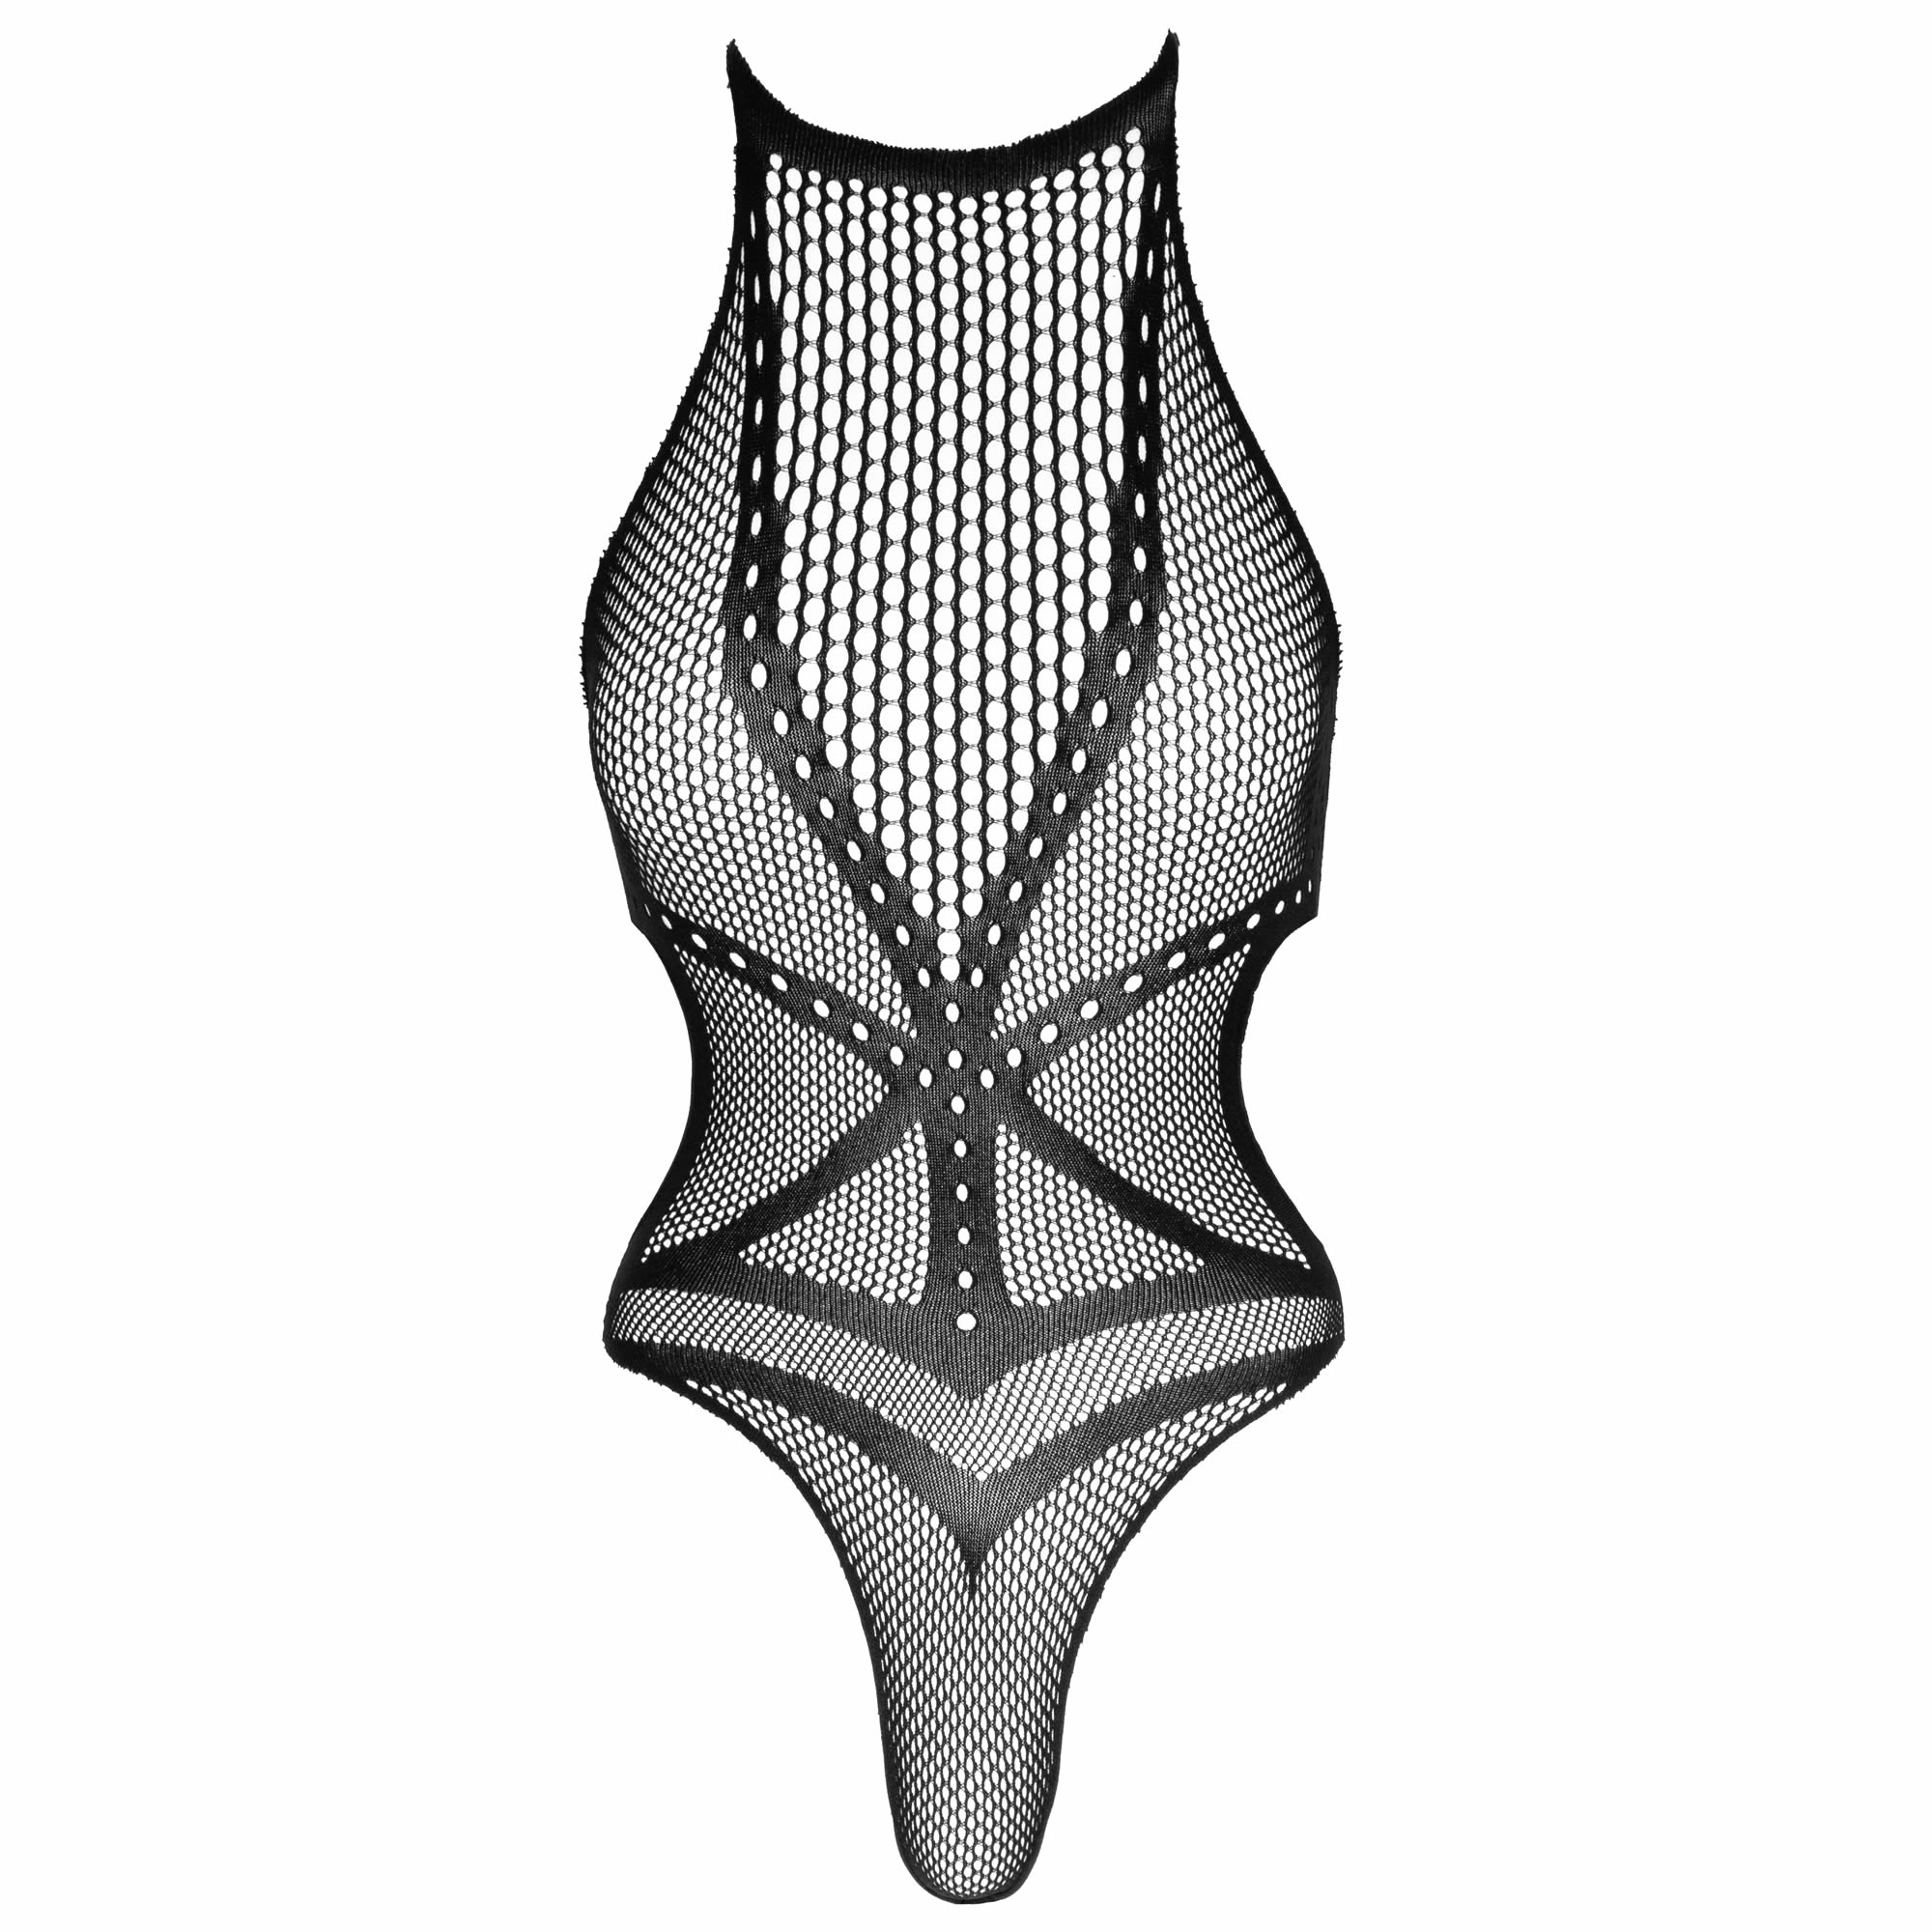 NO:XQSE Net Body med Harness Design